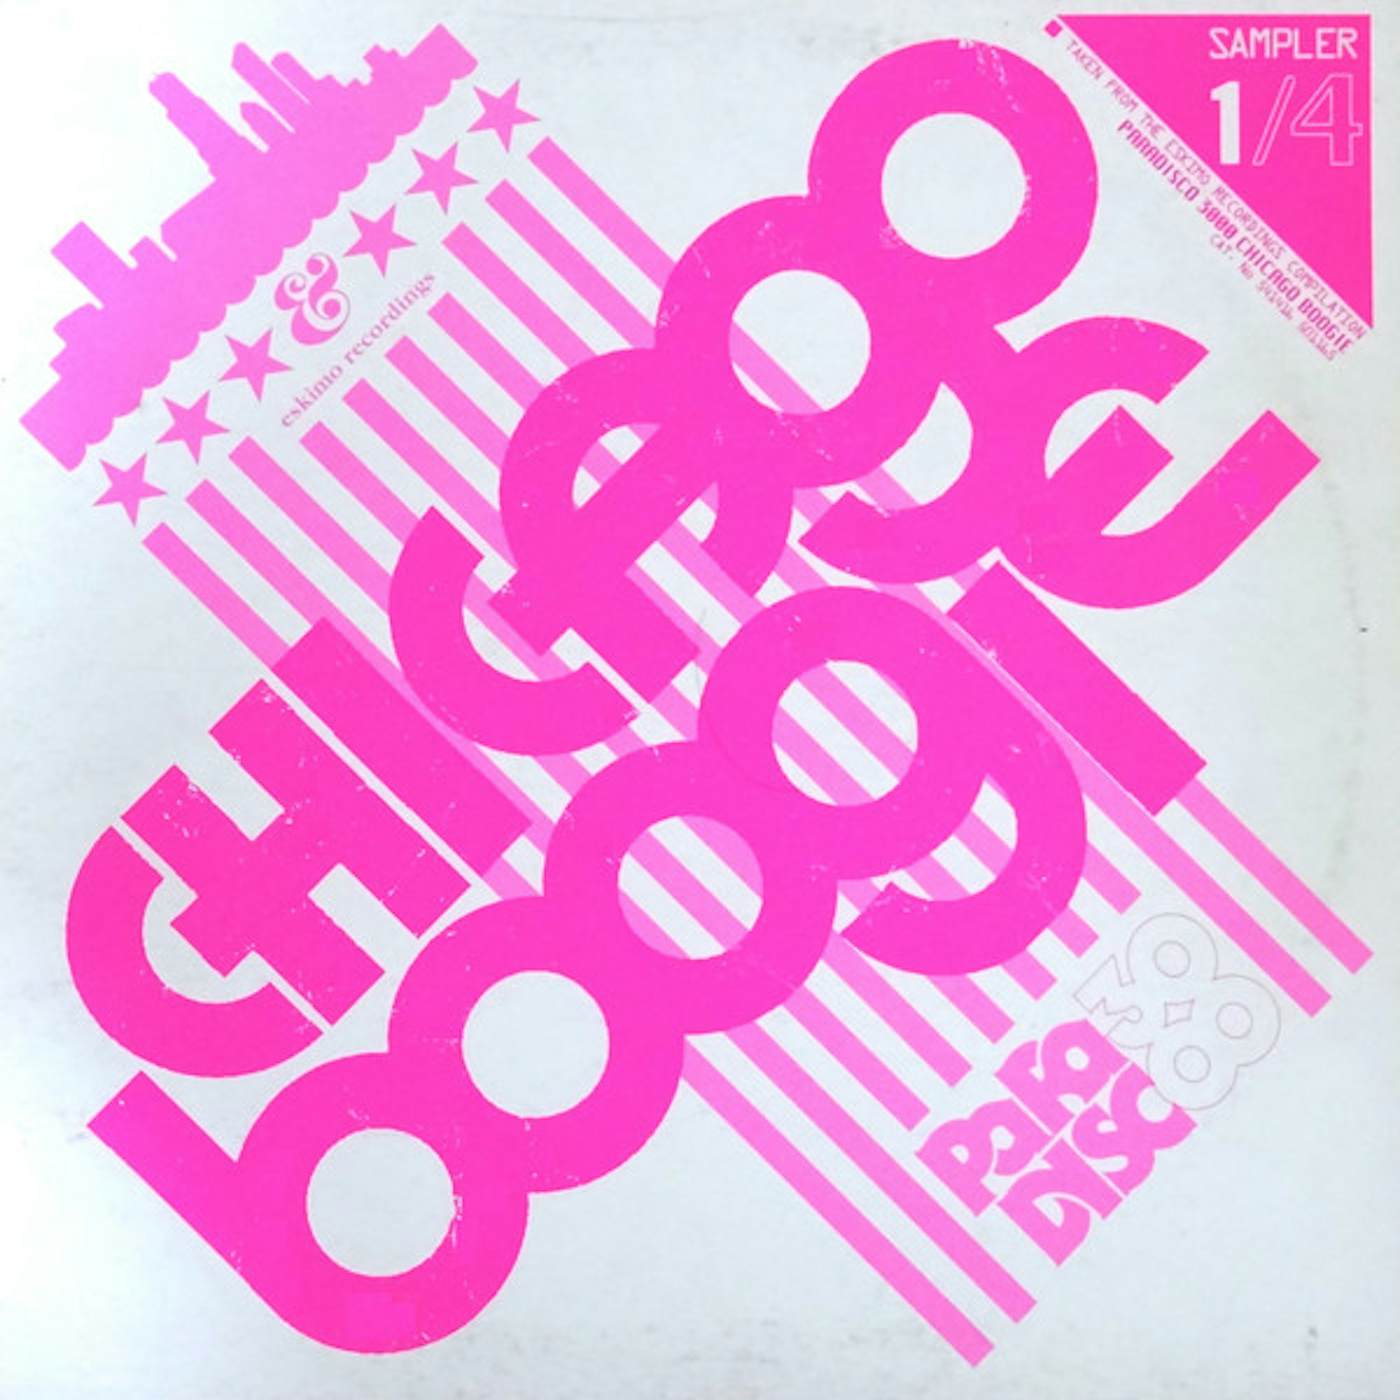 PARADISCO 3000 PRESENTS CHICAGO BOOGIE 1 / VARIOUS Vinyl Record